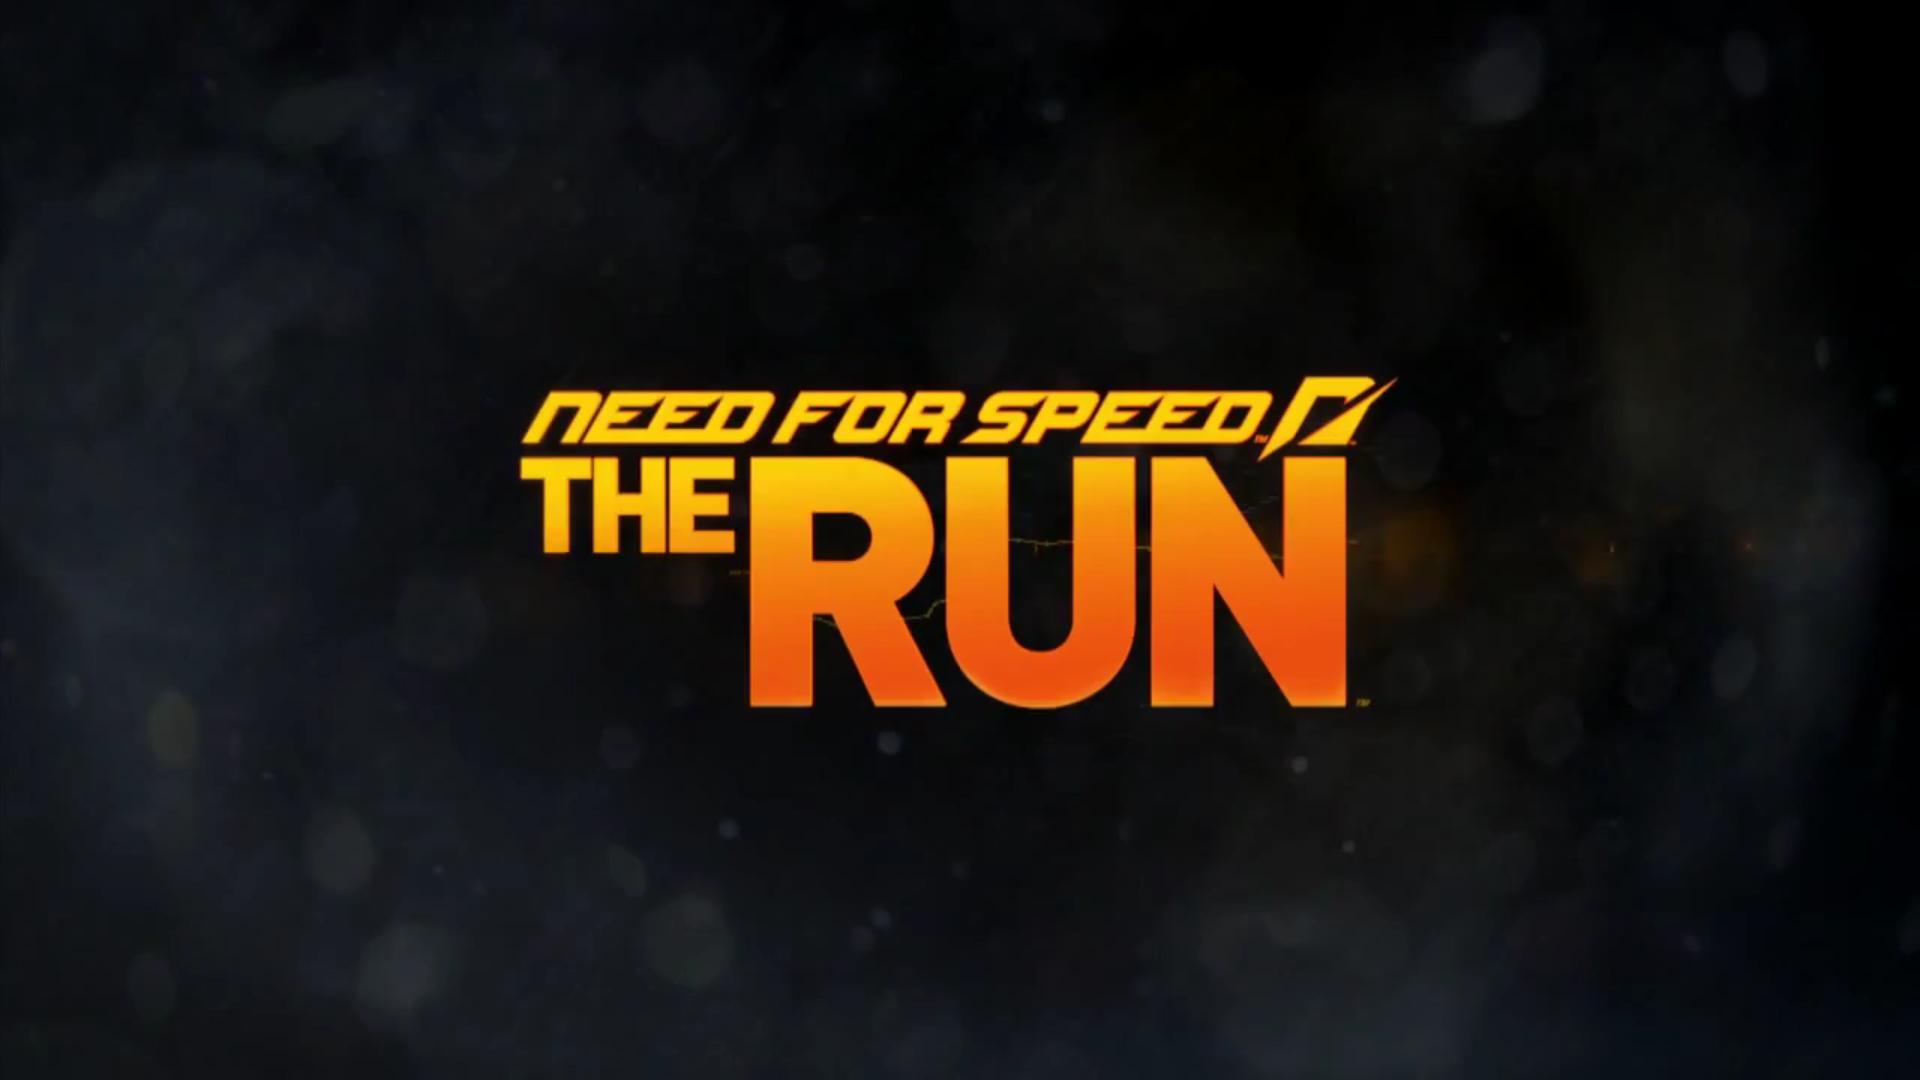 Speed main. NFS the Run. Картинки need for Speed the Run. Нфс РАН обложка. Need for Speed the Run лого.